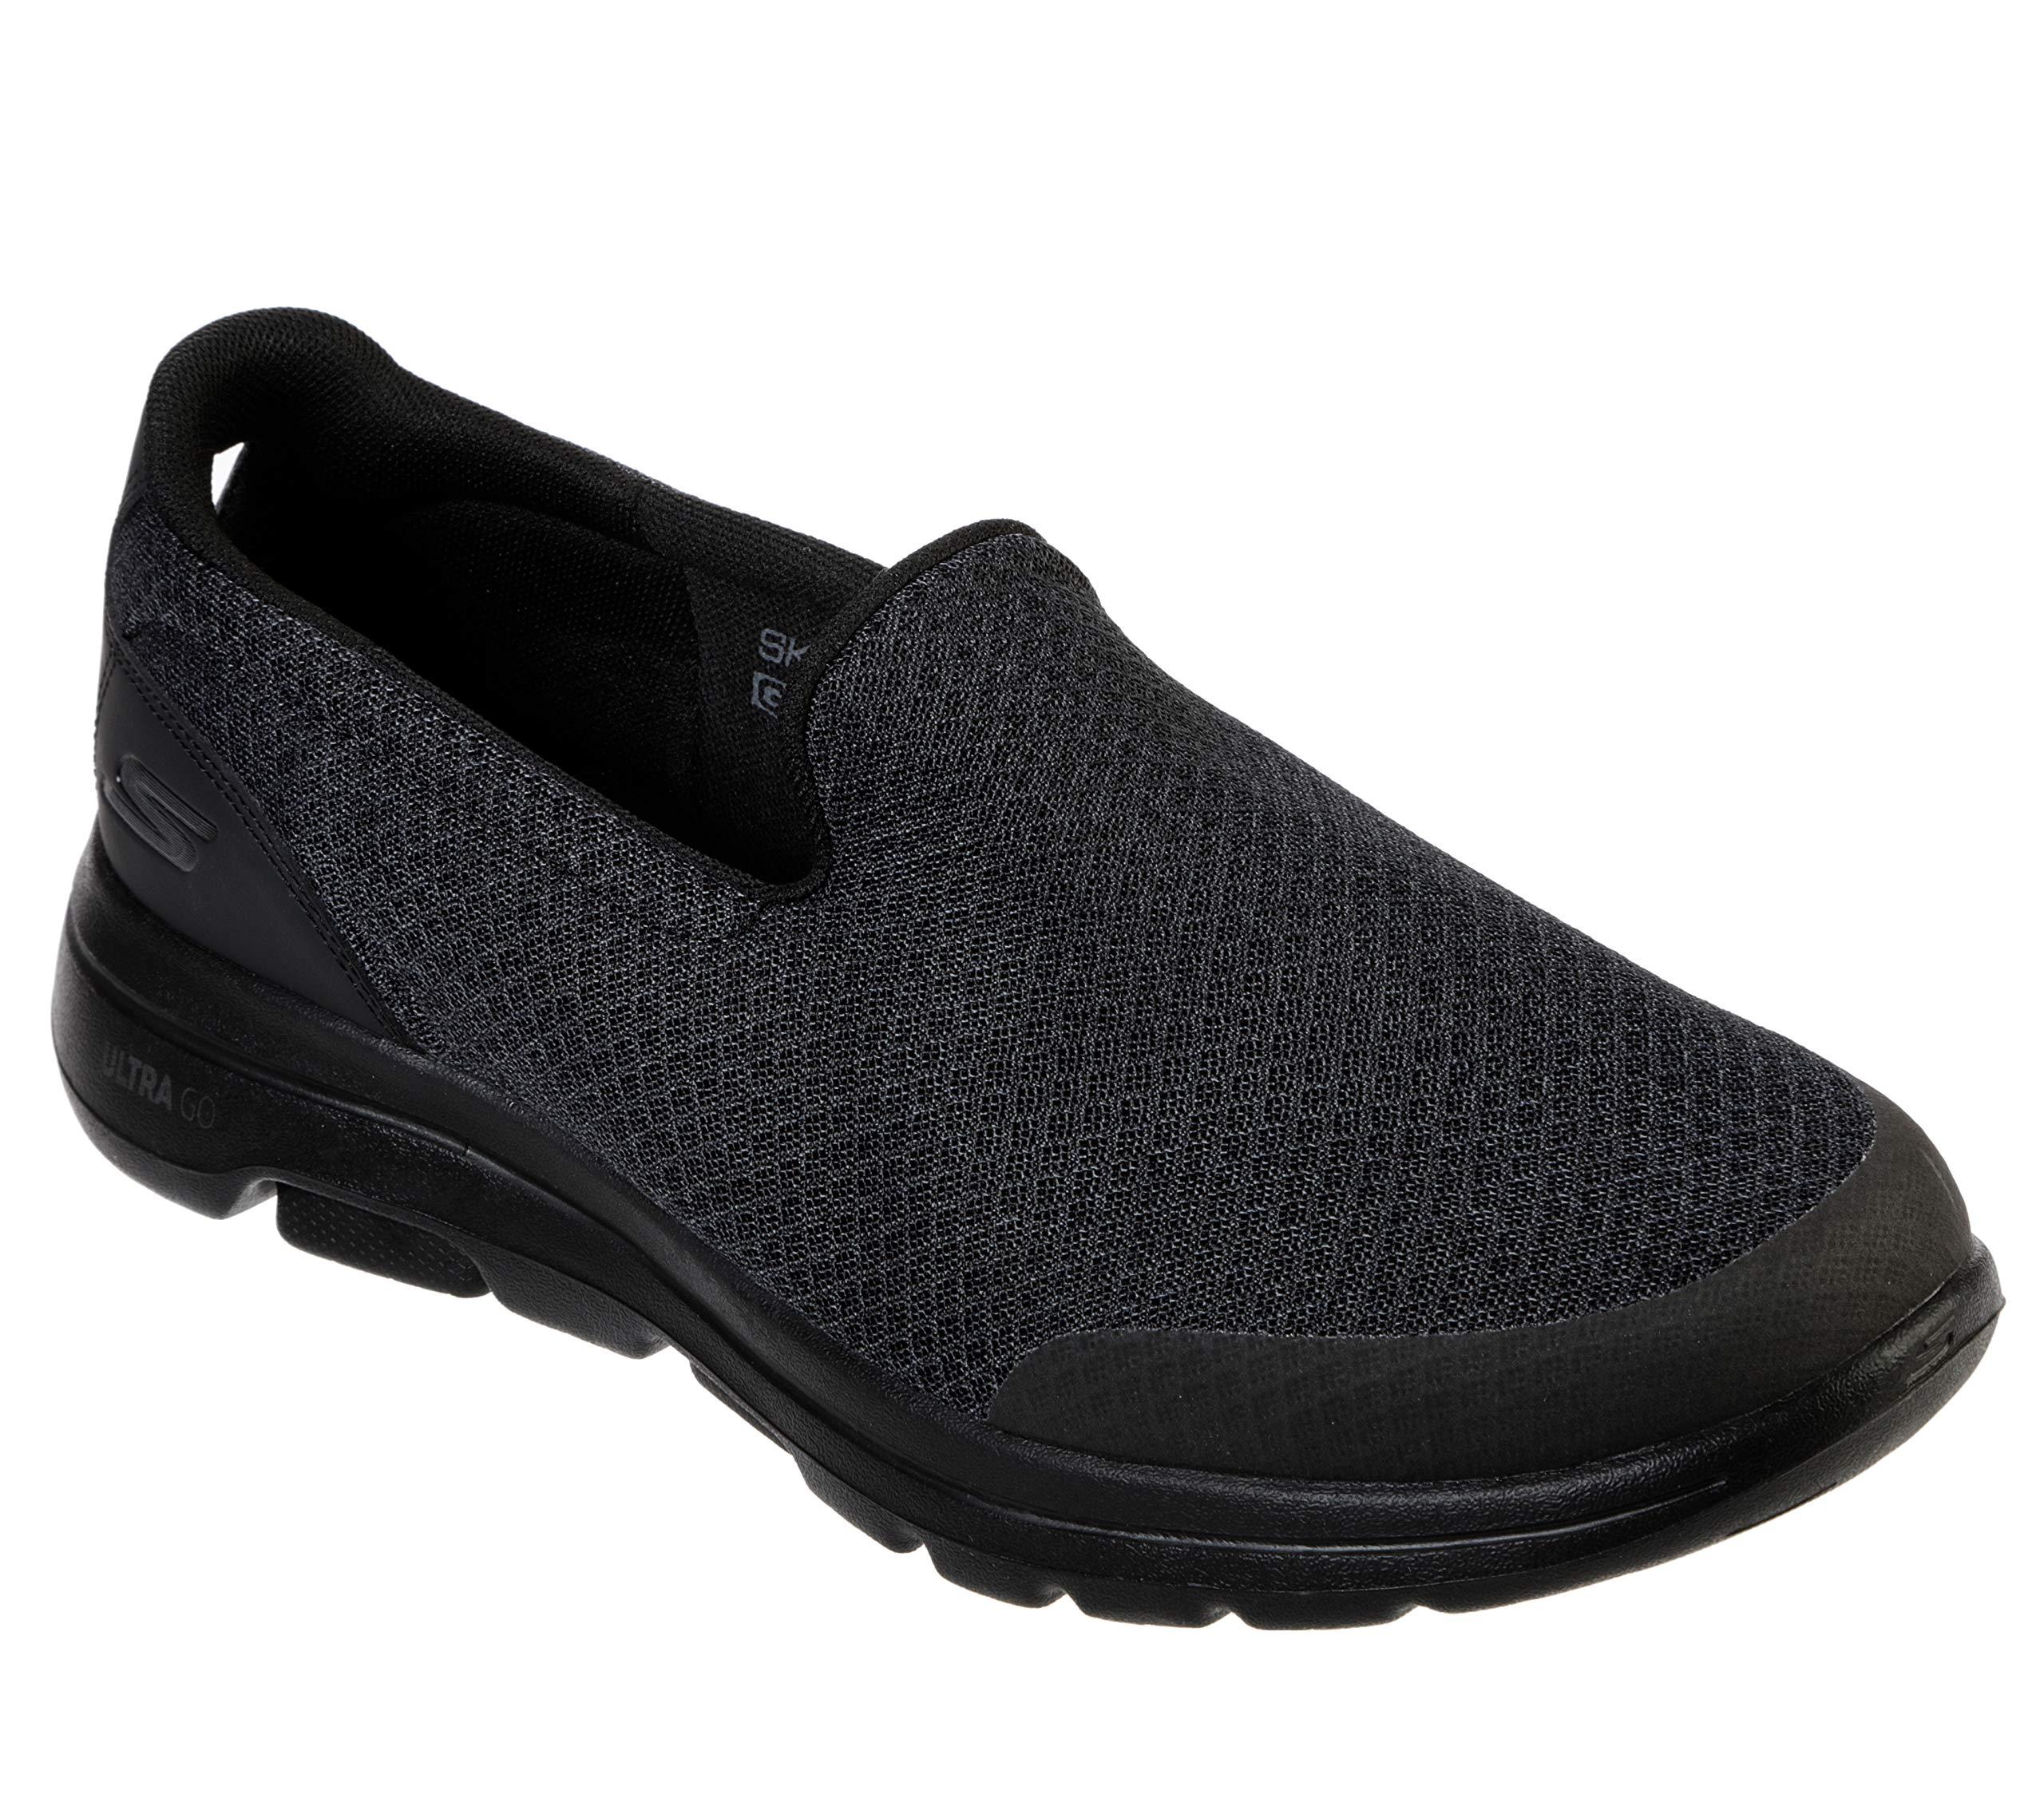 Skechers Go Walk 5-55503 Sneaker in Black for Men - Save 15% - Lyst